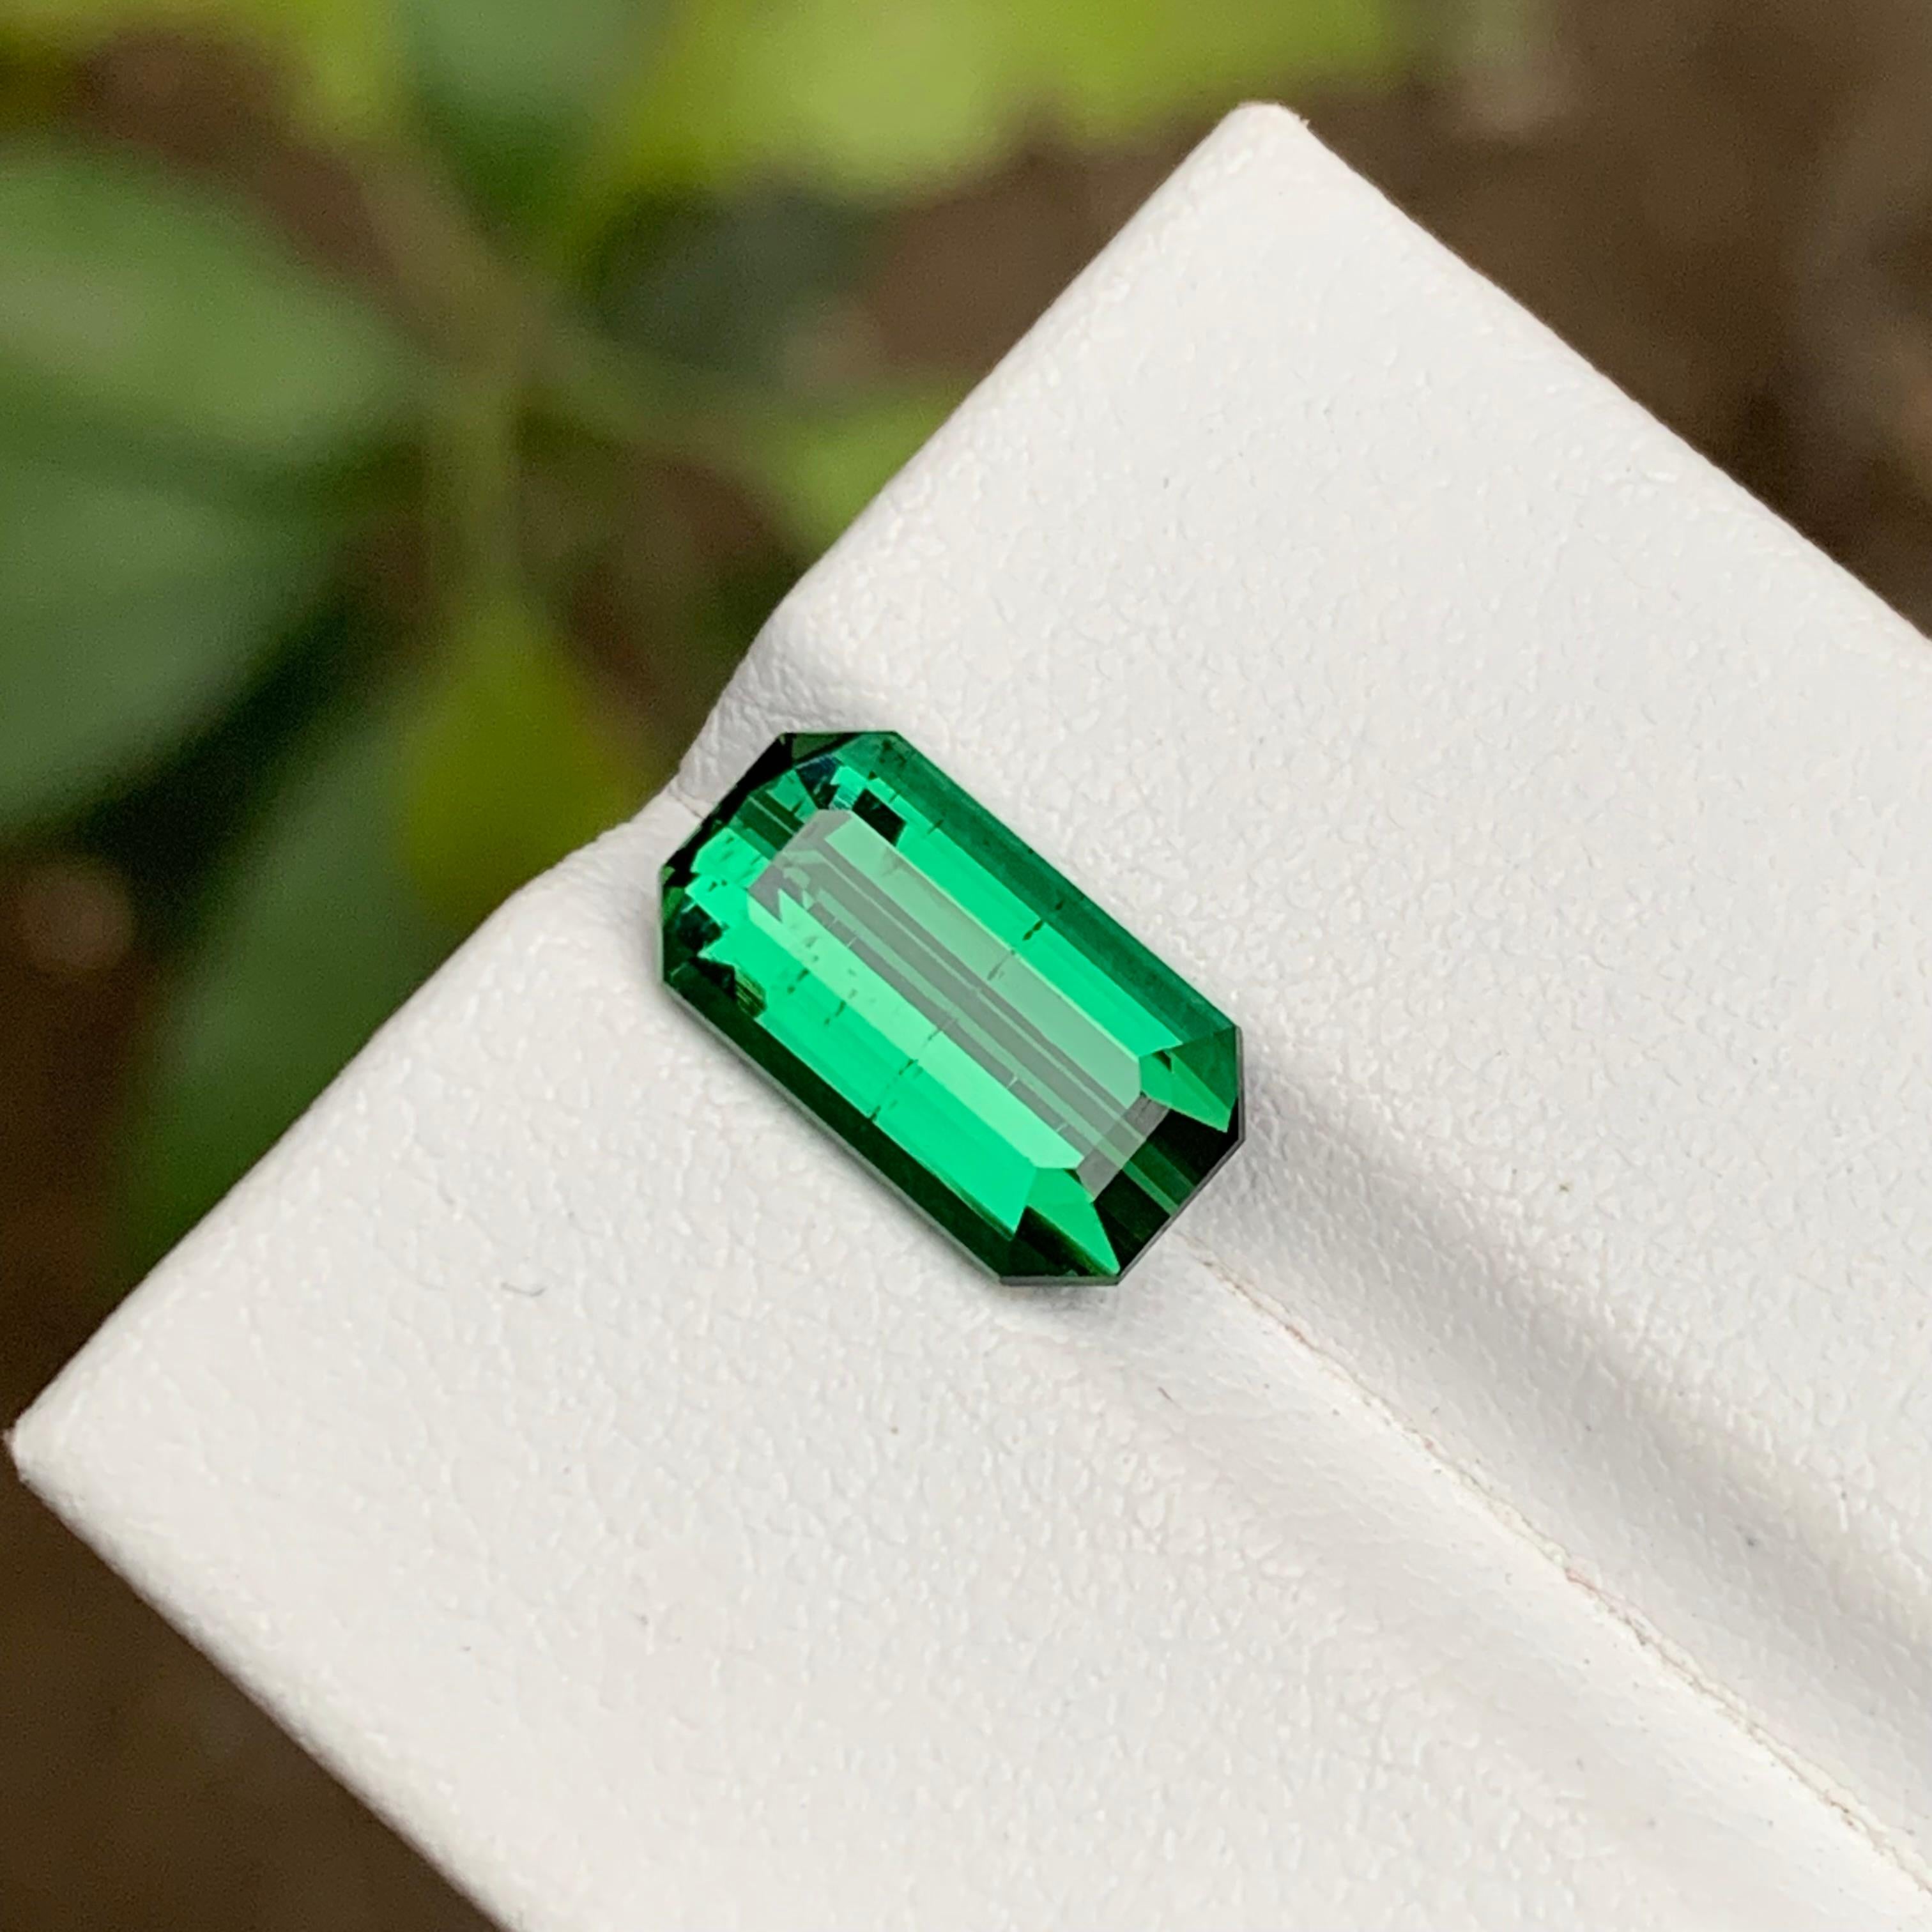 Rare Green Natural Tourmaline Gemstone, 3.85 Carat Emerald Cut for Ring/Pendant 5